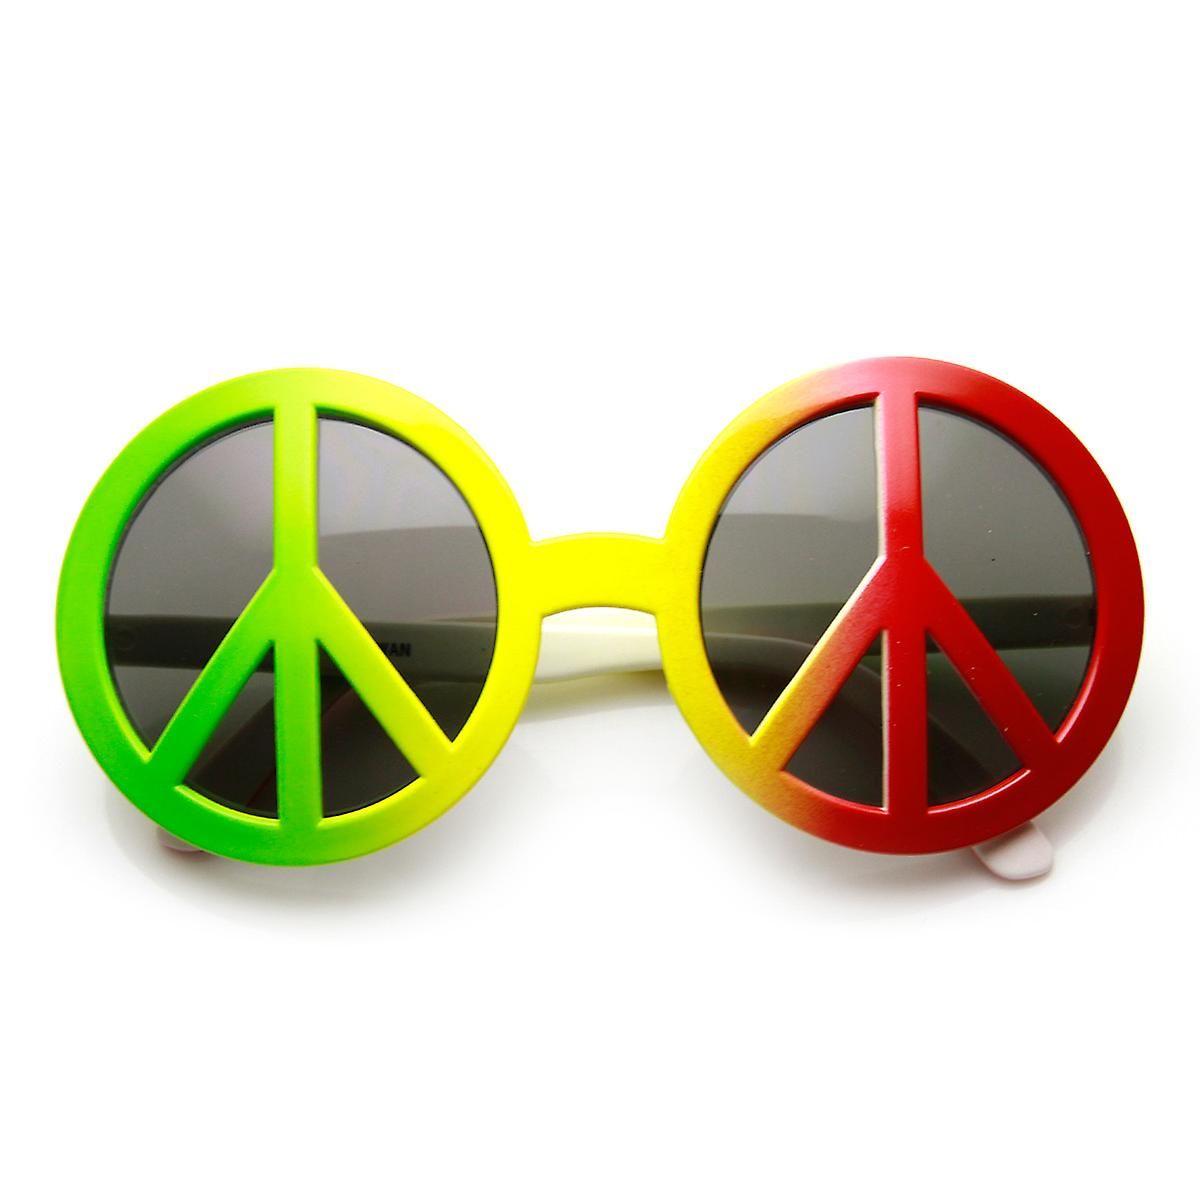 Hippie Glasses Logo - Peace Sign 70's Era Hippie Free Love Woodstock Novelty Costume Party